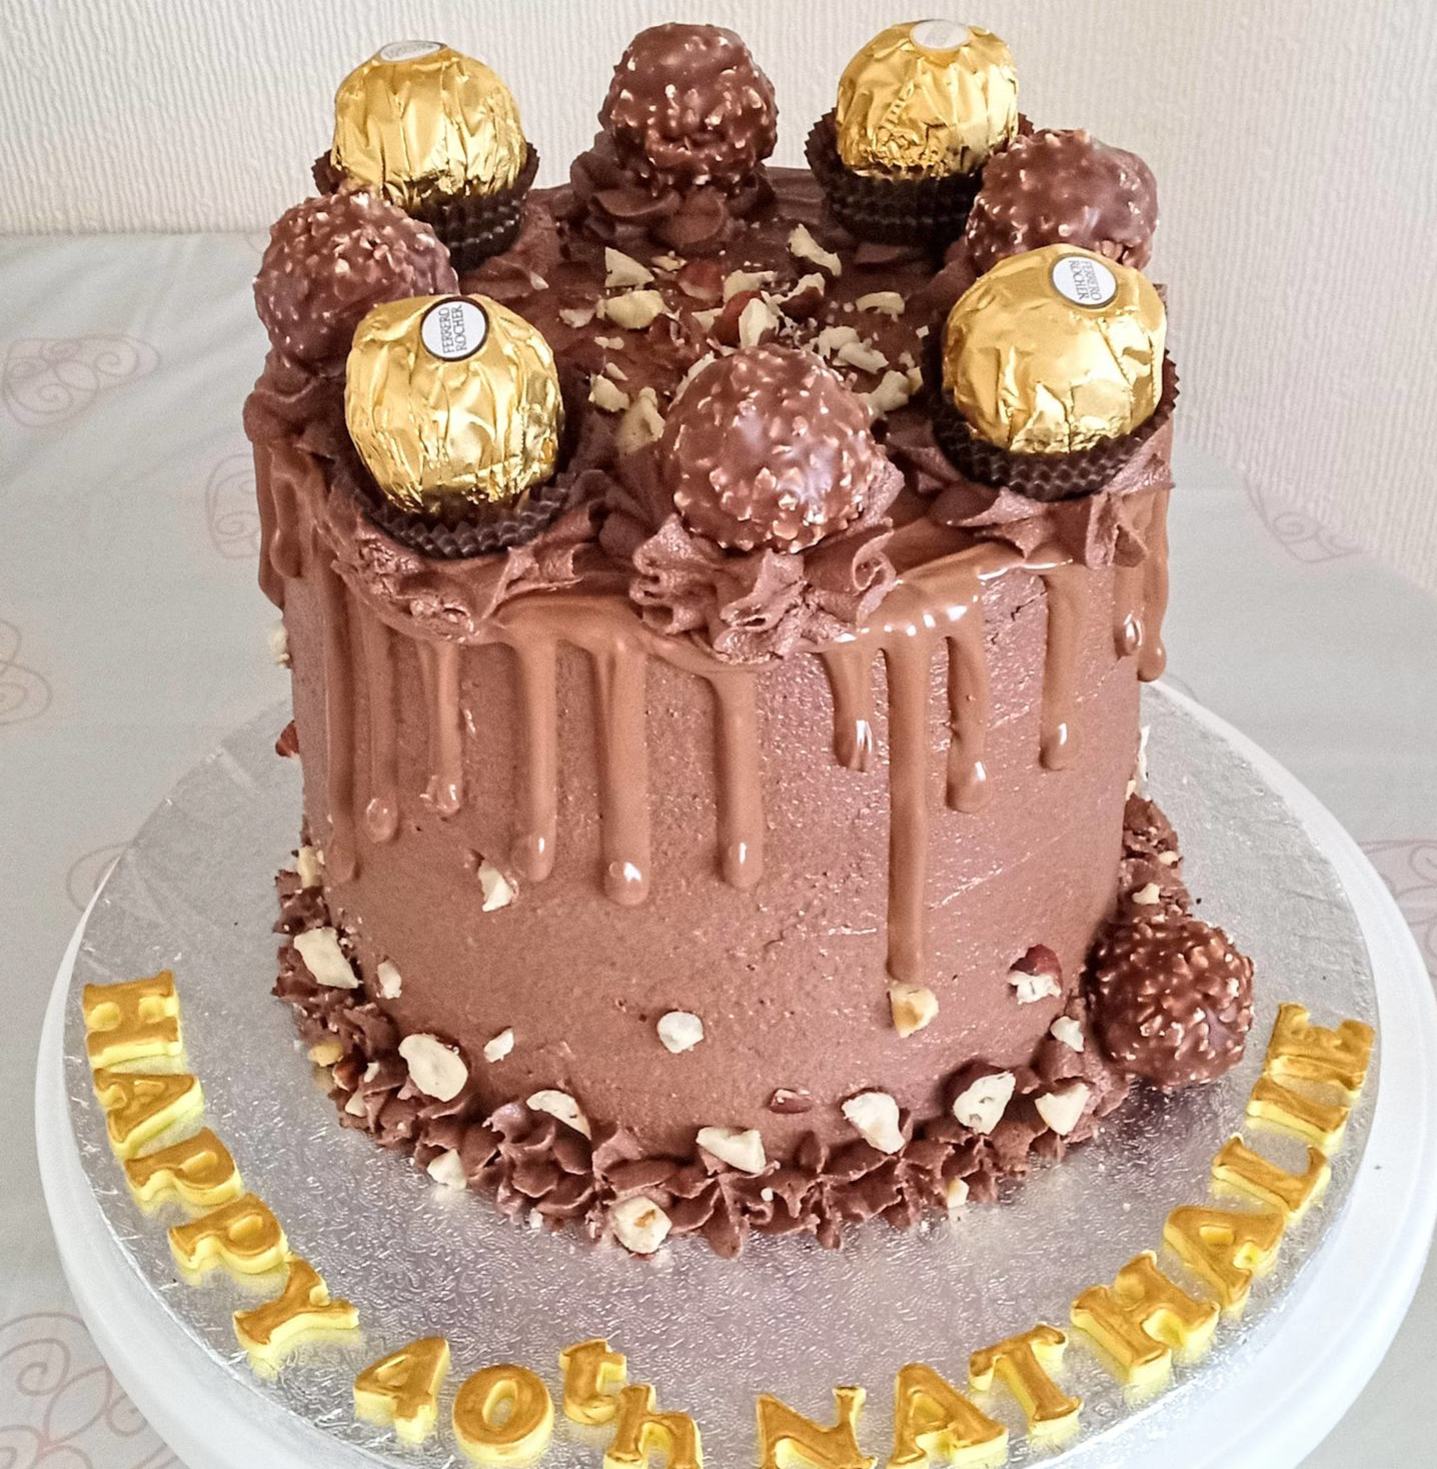 Chocolate and hazelnut 40th birthday drip cake